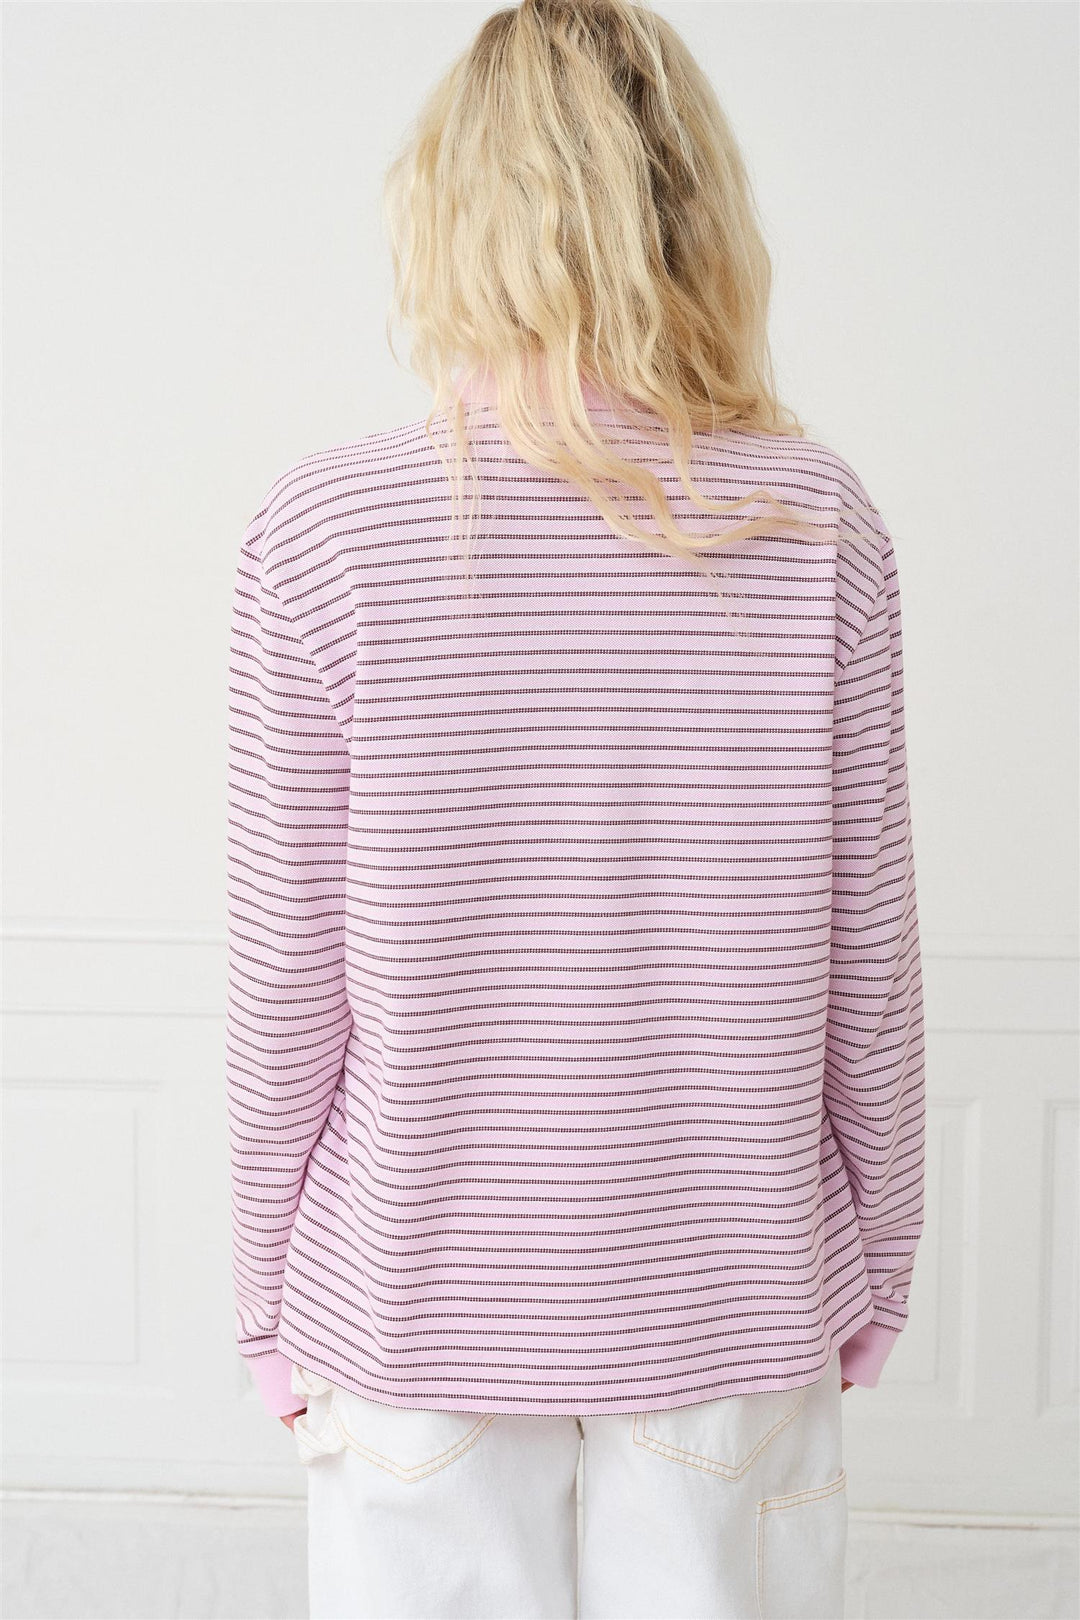 Serena Polo Shirt Berry Stripe